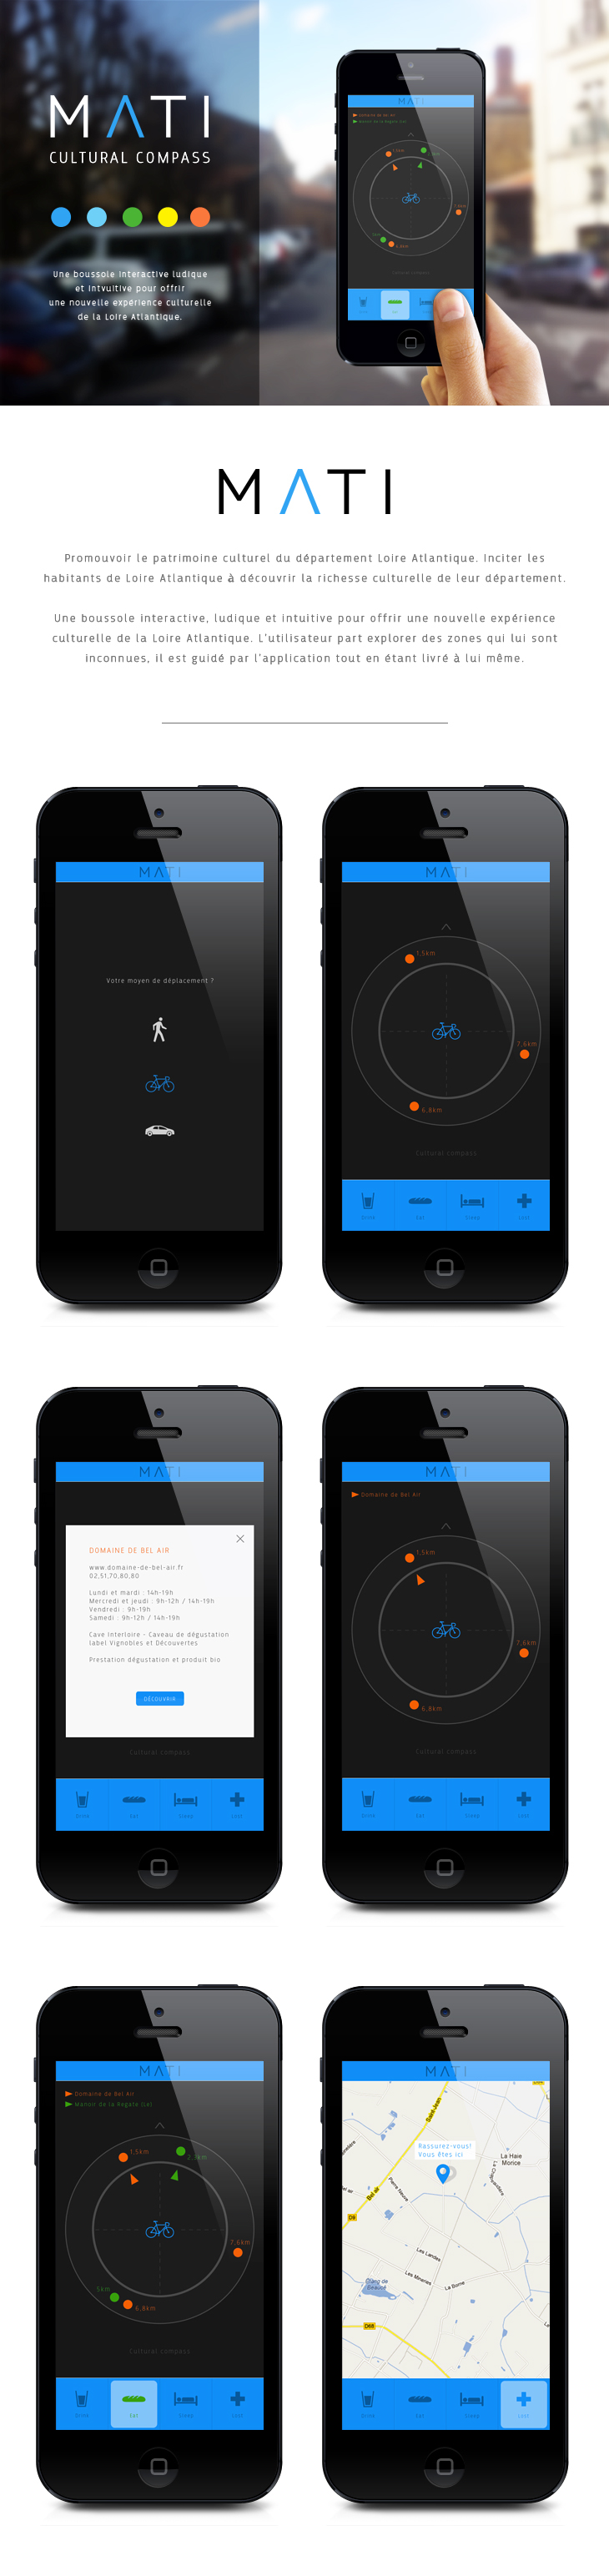 mati application Nantes smartphones cultural compass design Webdesign concept mobile UI